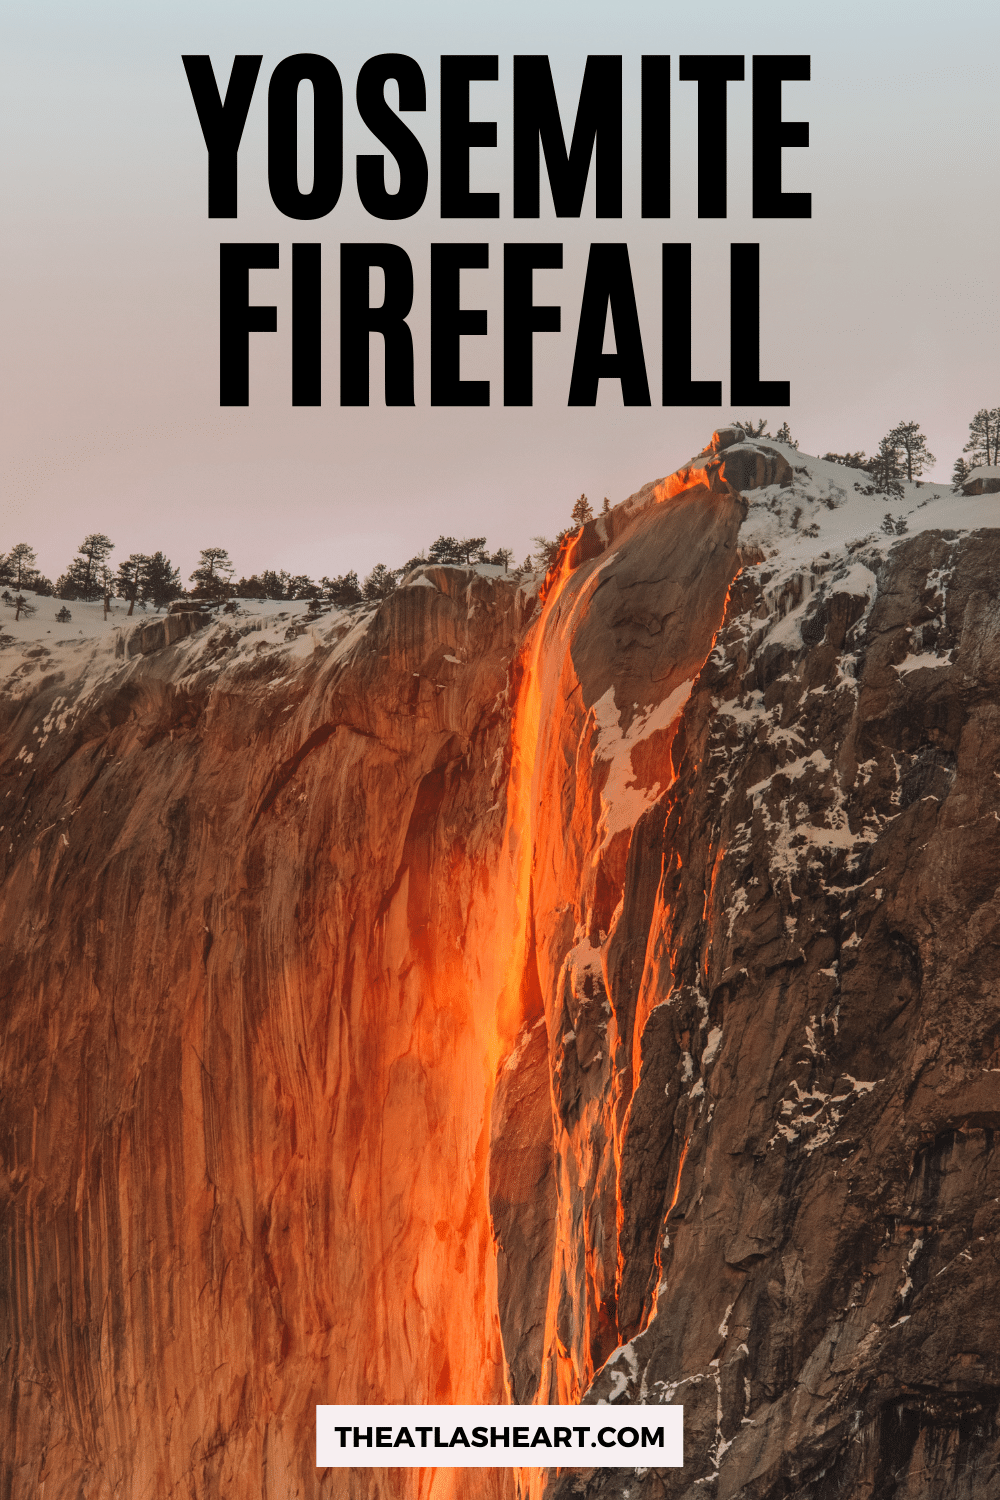 Yosemite Firefall: How to Experience this Magical Yosemite Phenomenon